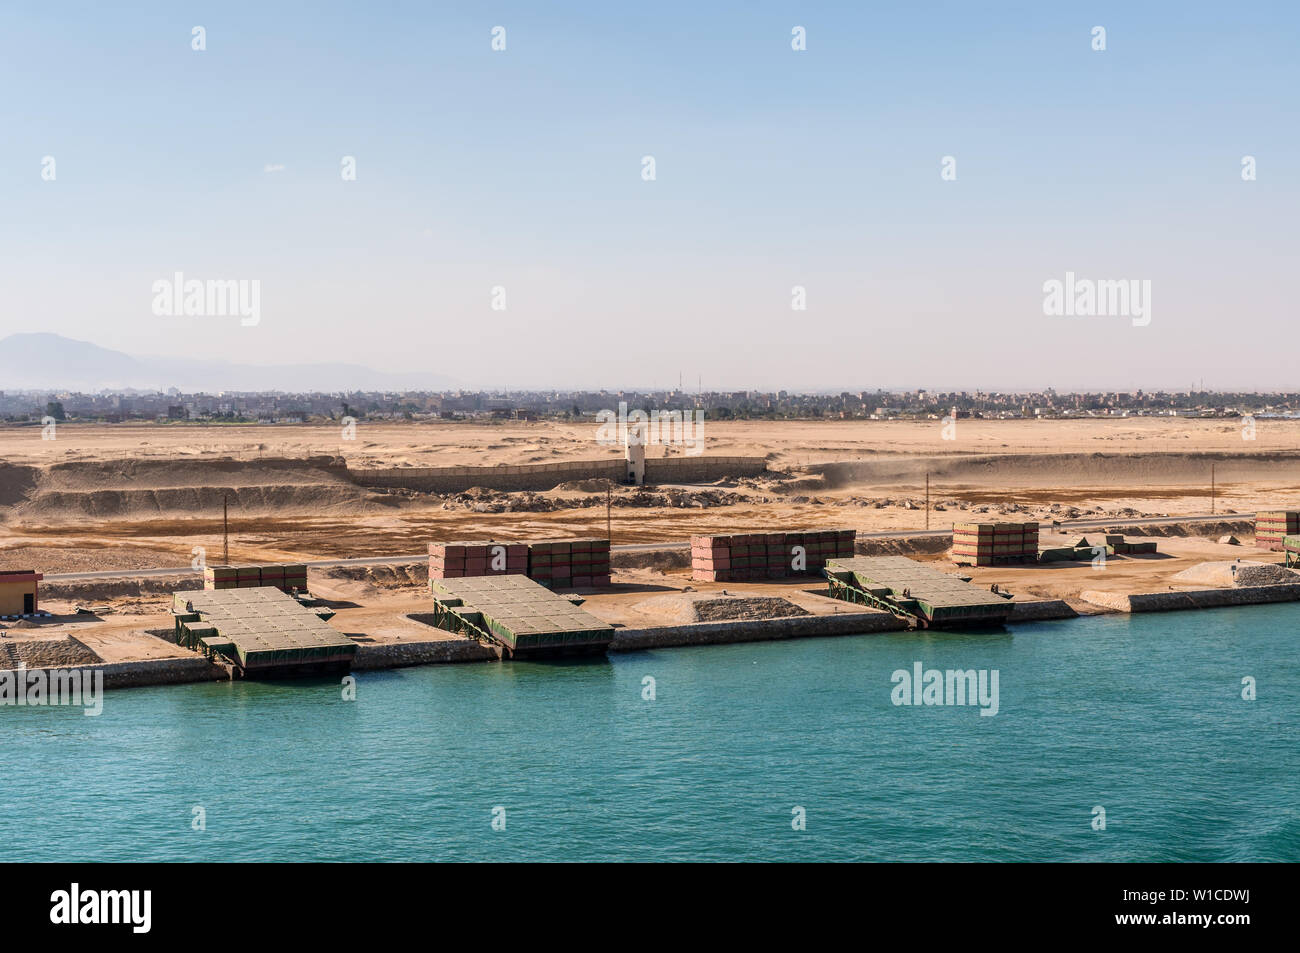 Suez, Egypt - November 5, 2017: Pontoons bridge for crossing the Suez Canal lie on the shore of canal near Suez, Egypt. Stock Photo